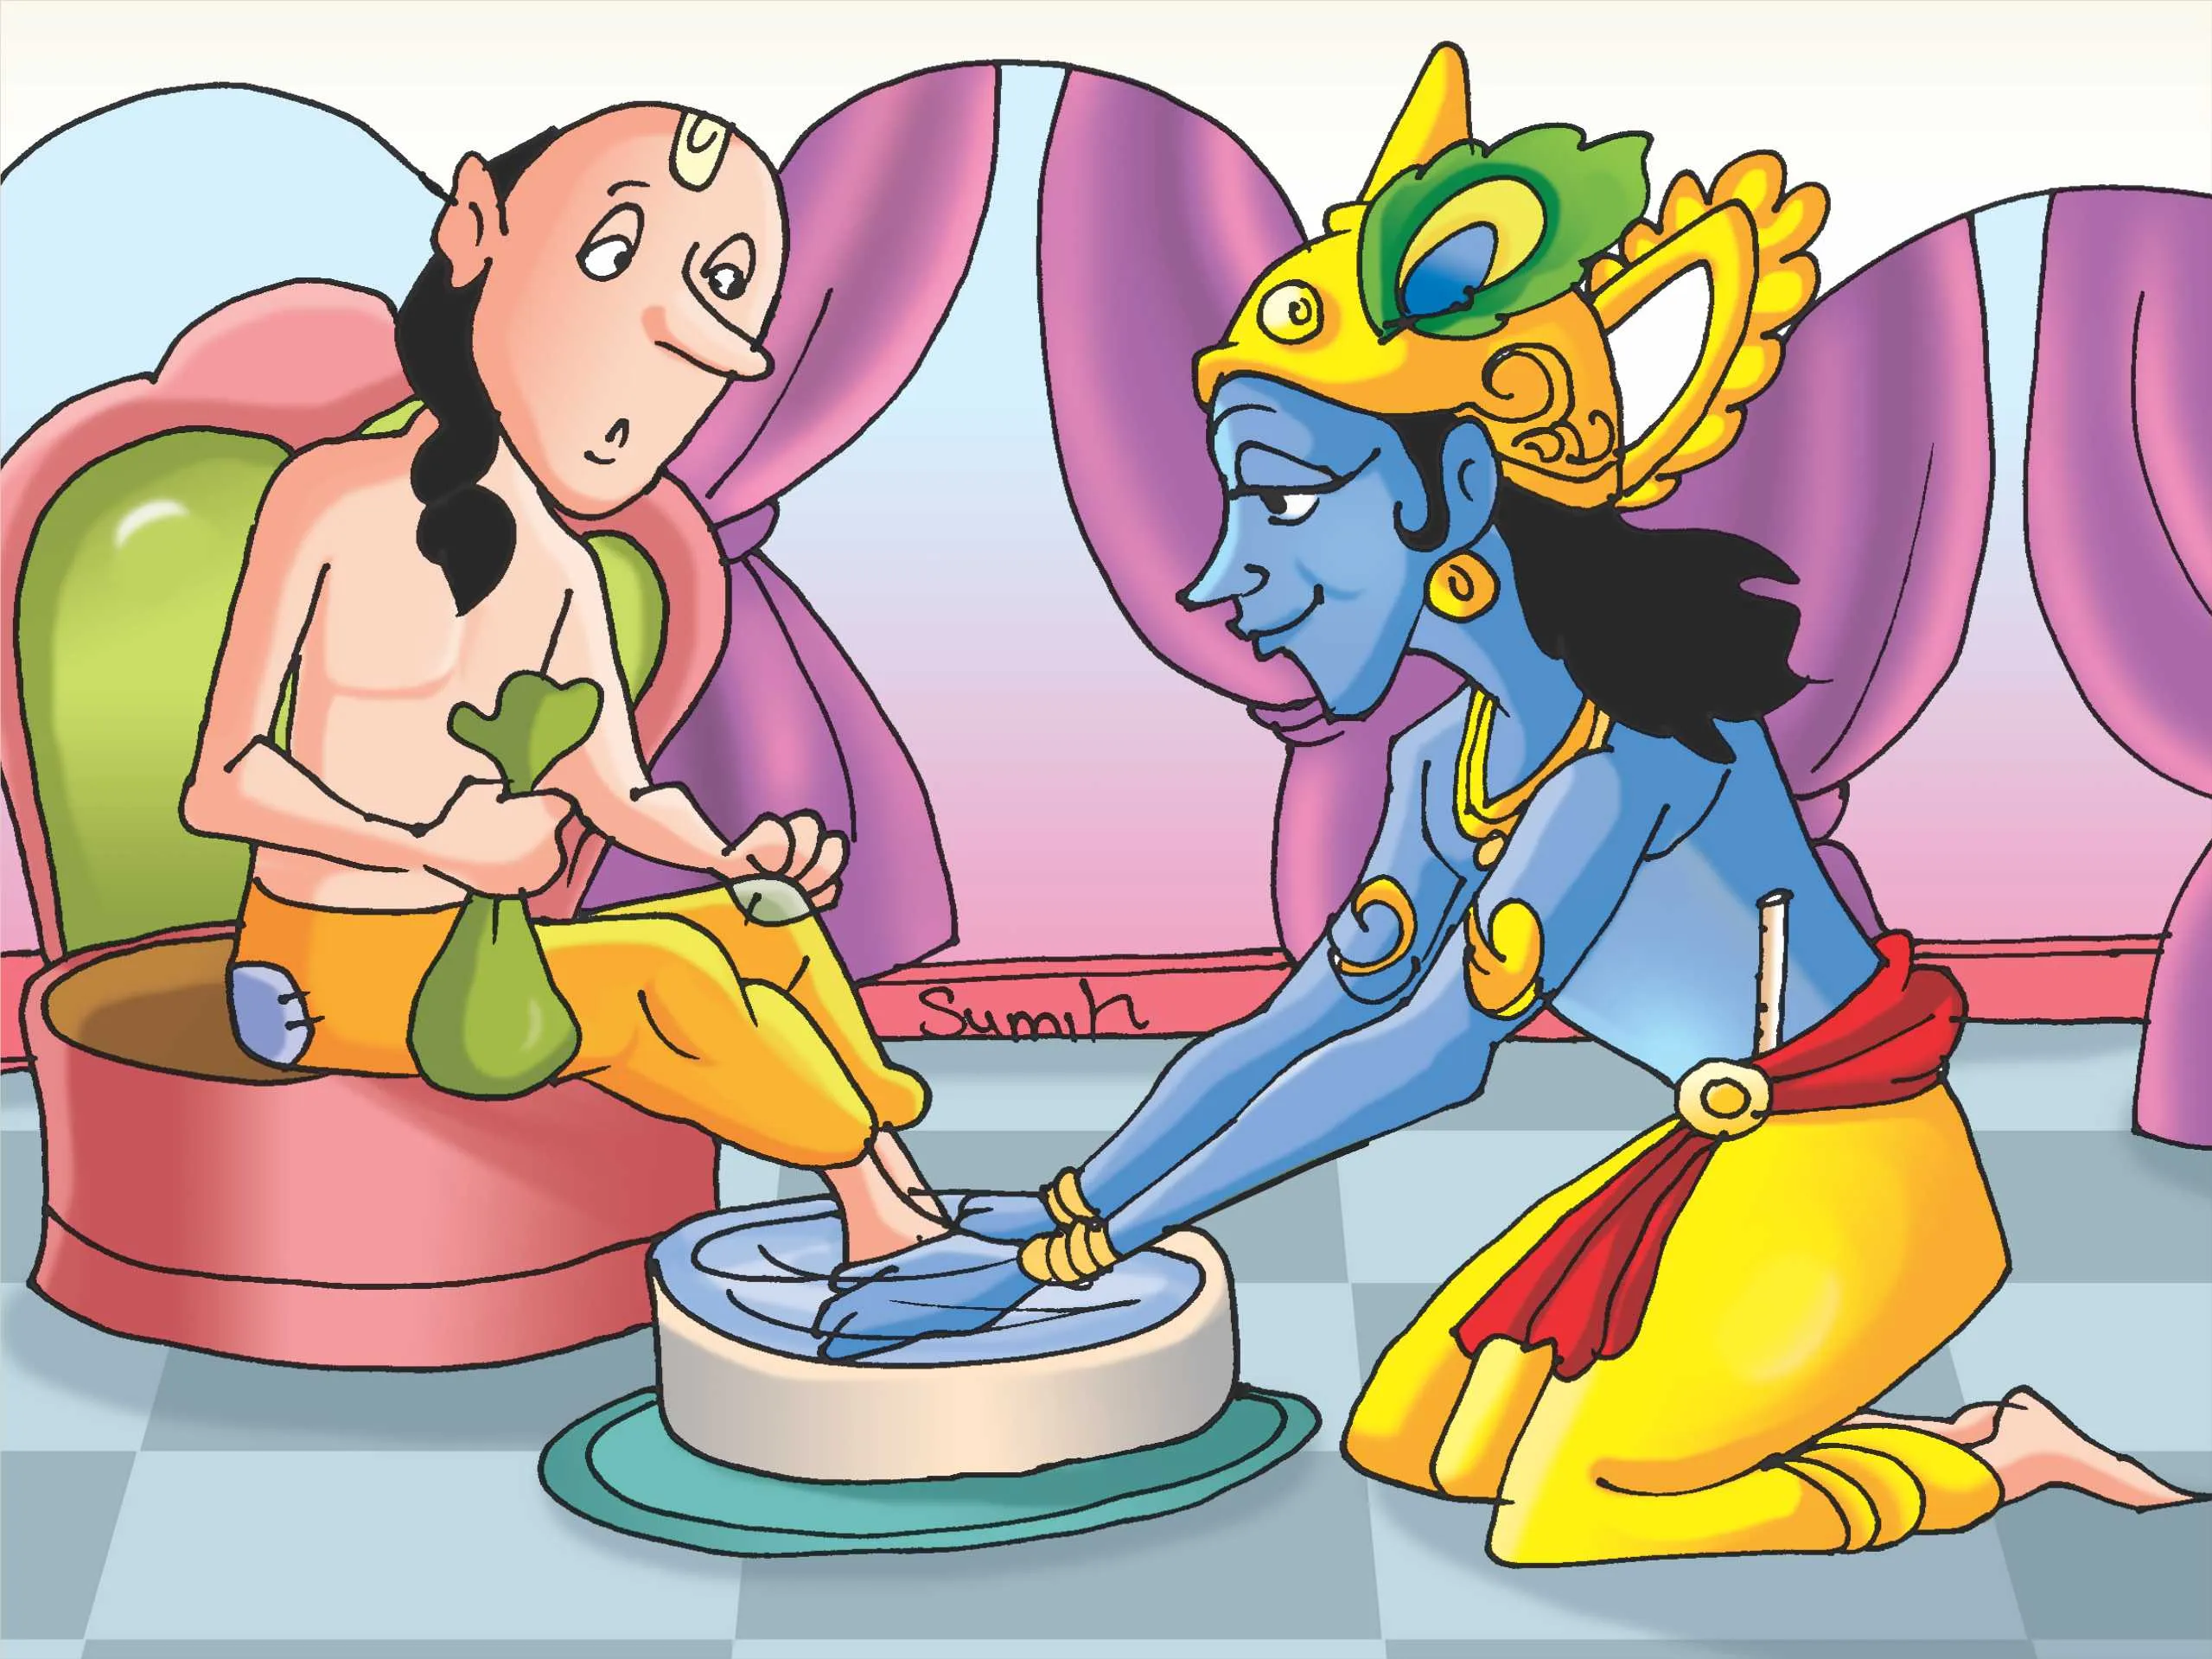 Shri krishna greeting his friend sudama cartoon image